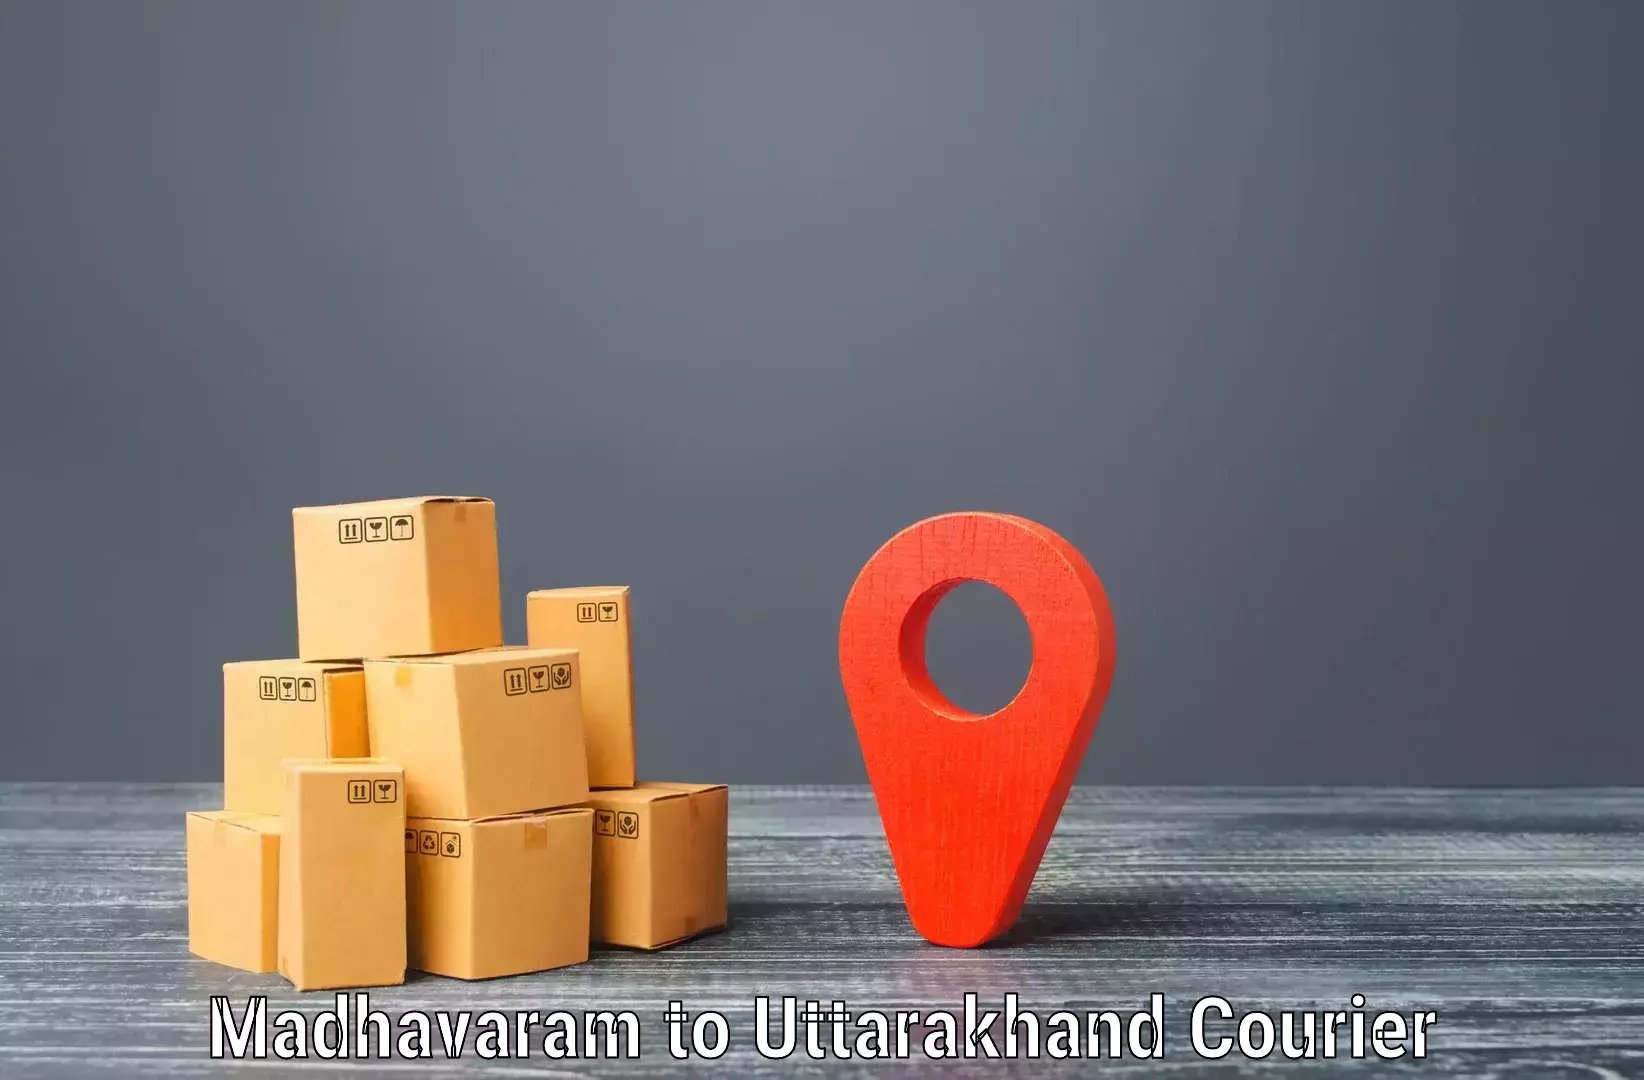 State-of-the-art courier technology Madhavaram to Karnaprayag